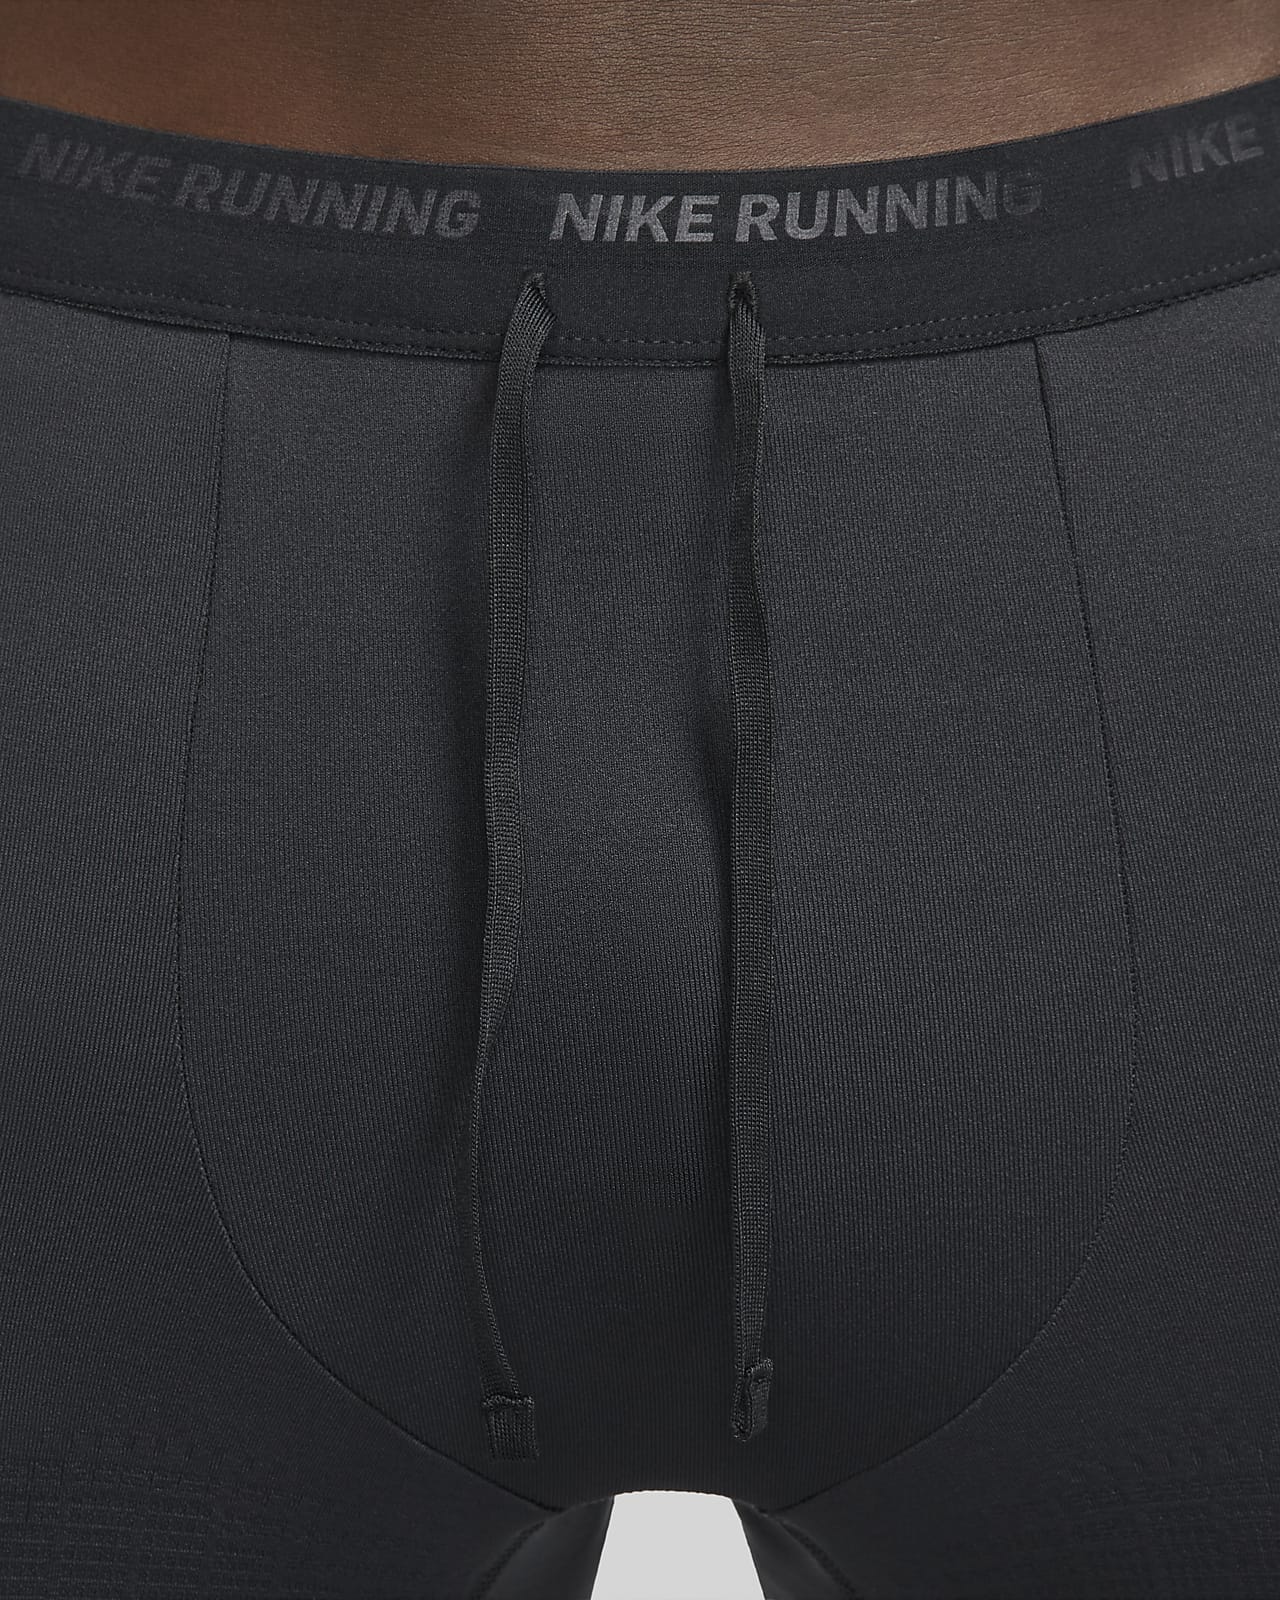 Men's Nike Storm-FIT Phenom Elite Running Tights DD6229-010 Black Size Small  NEW цвет черный — купить недорого с доставкой, 17491957